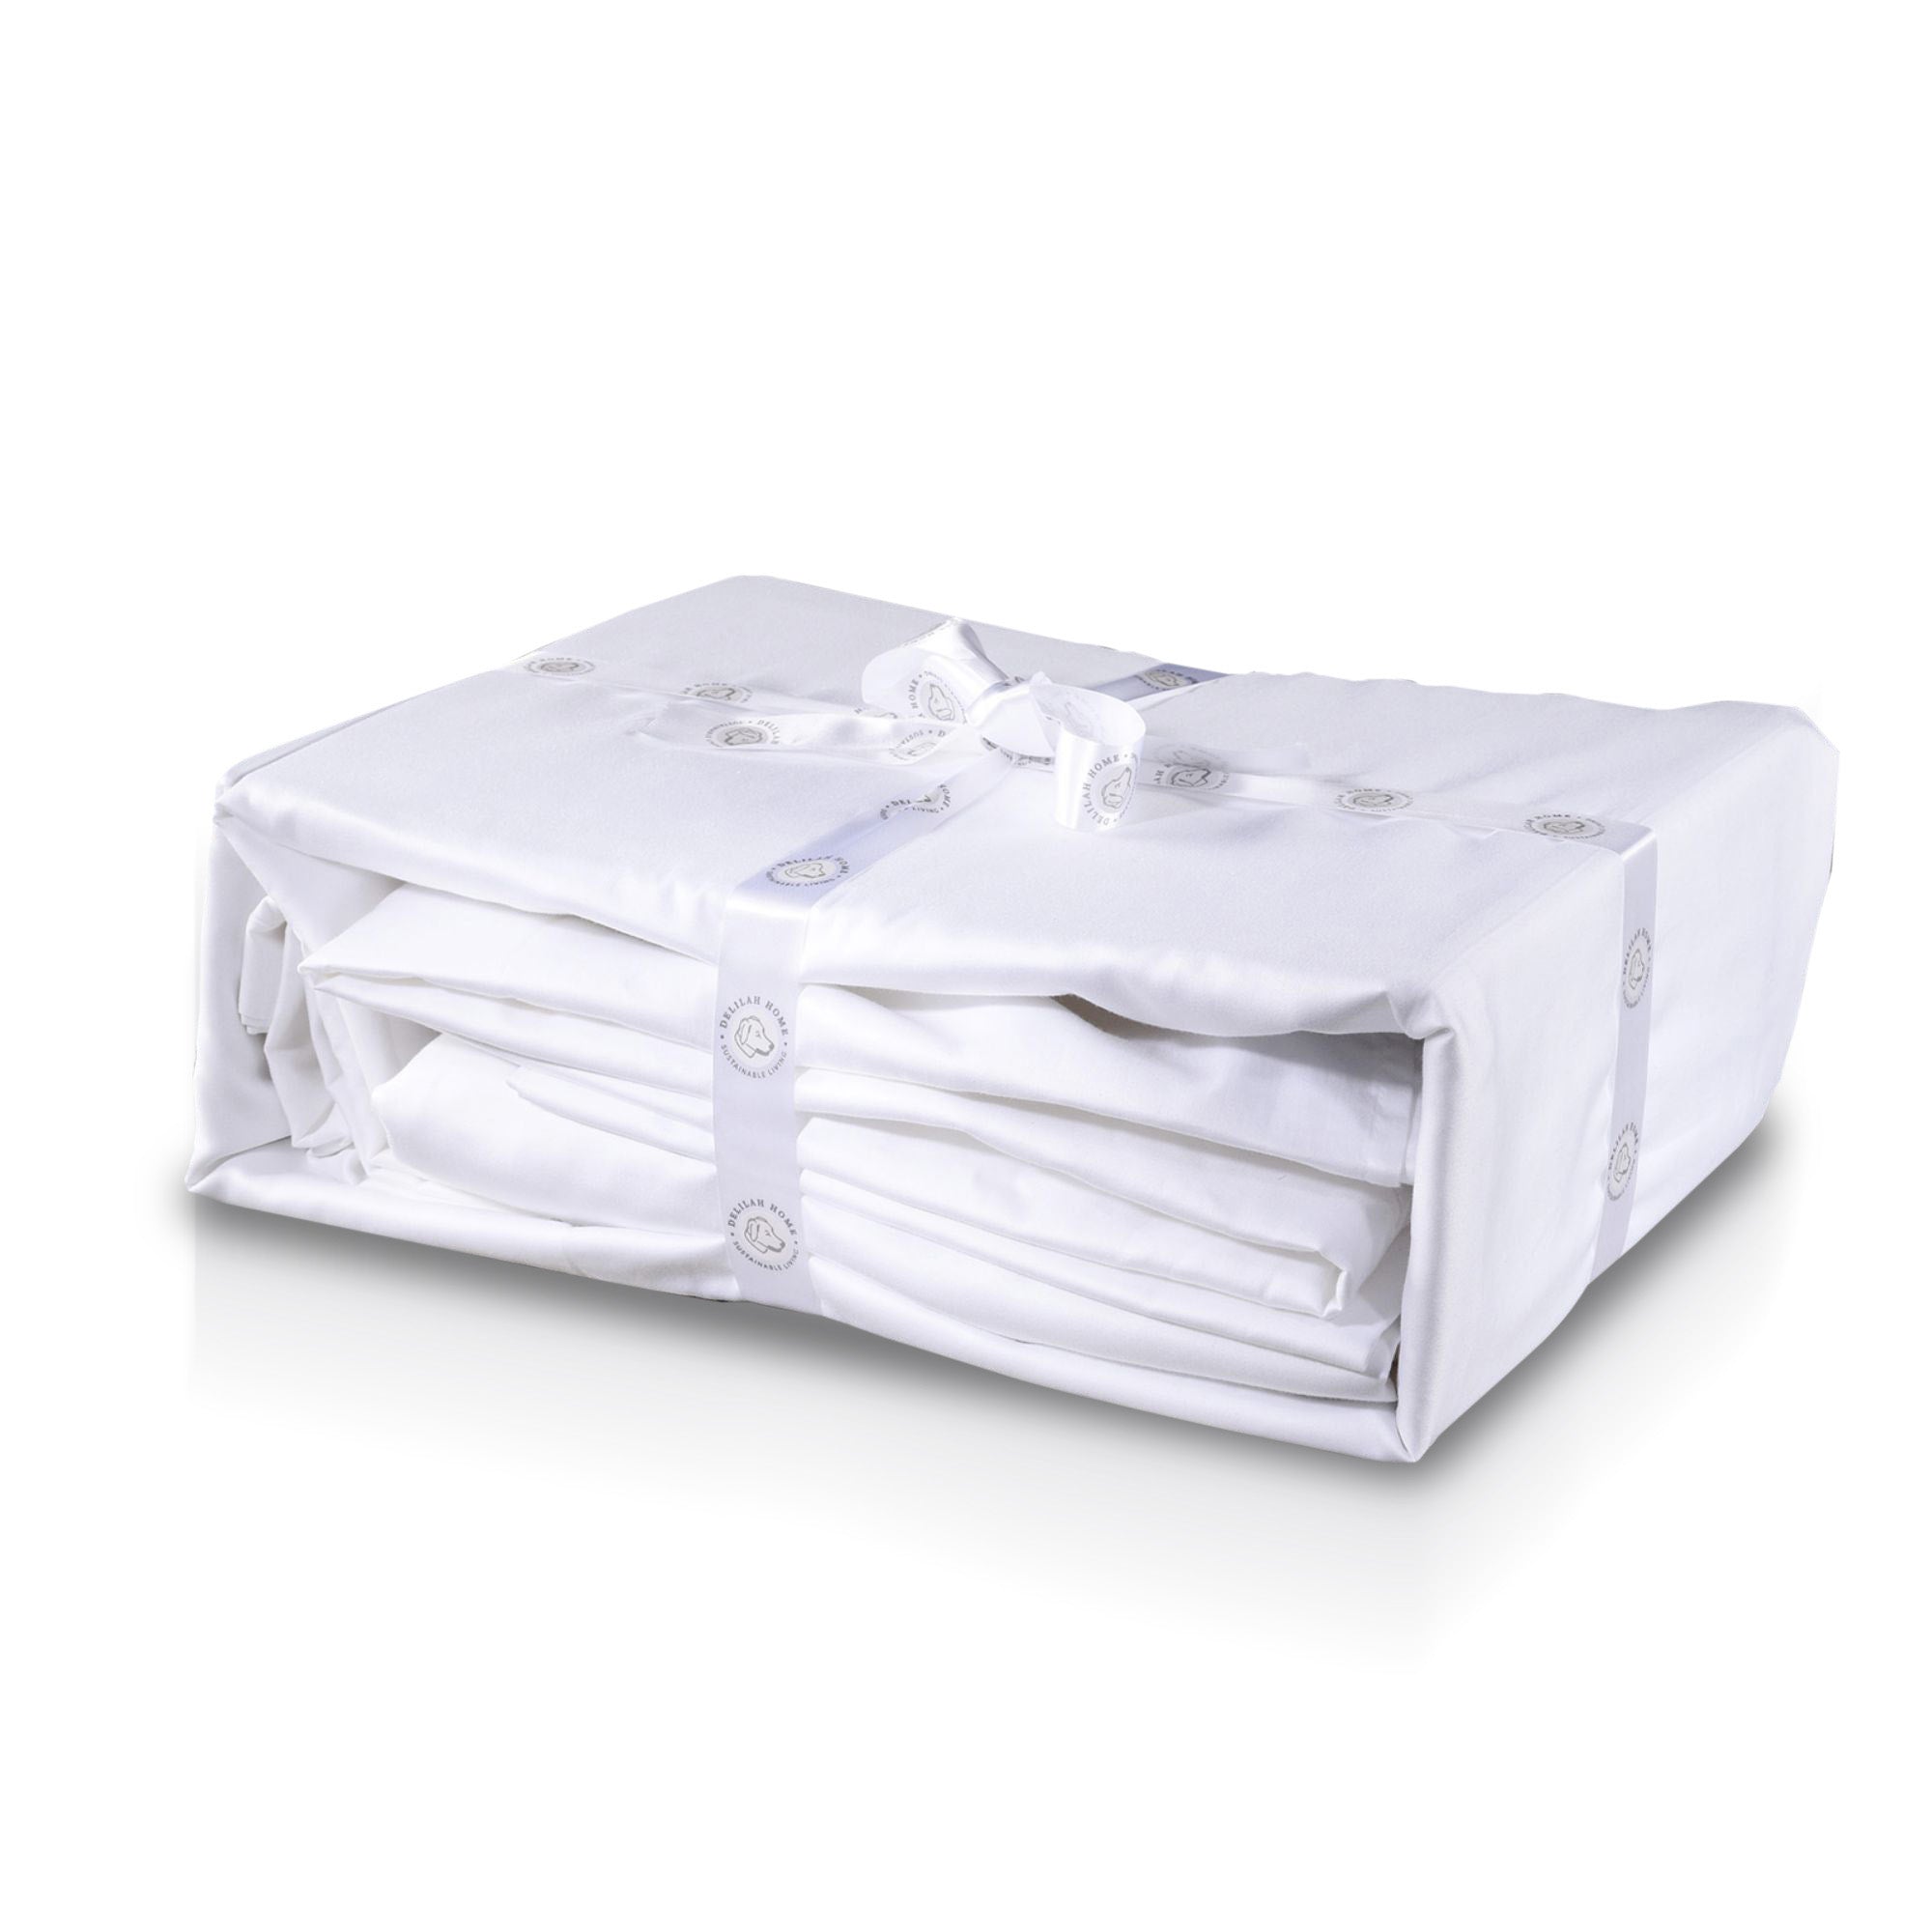 100% Organic Cotton Bed Sheet Collection - Dormi